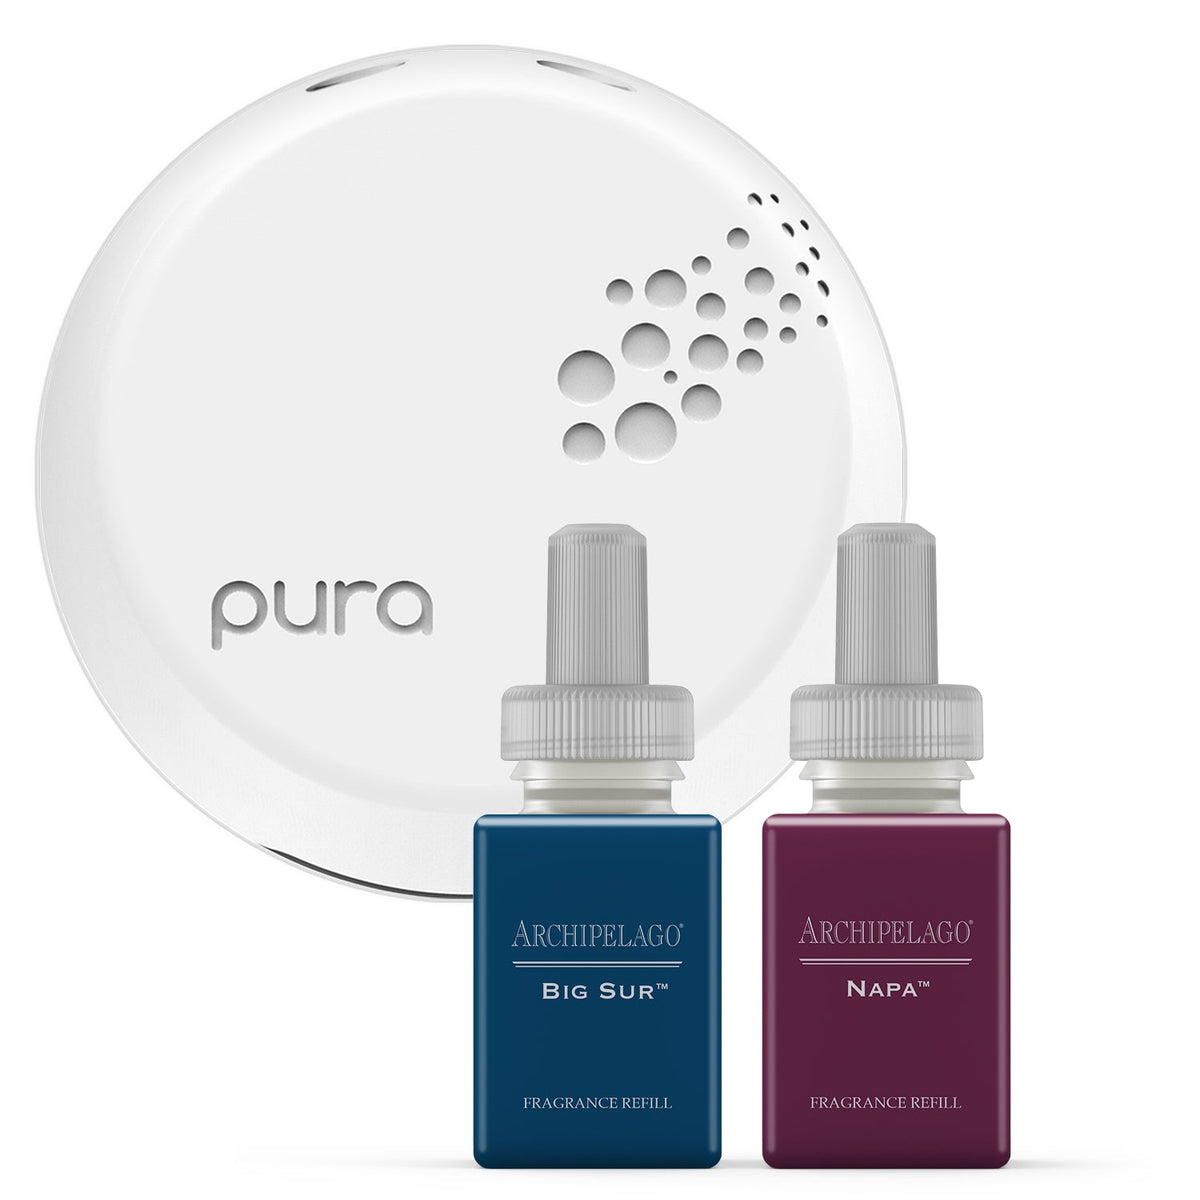 Nest New York Pura Smart Home Fragrance Diffuser